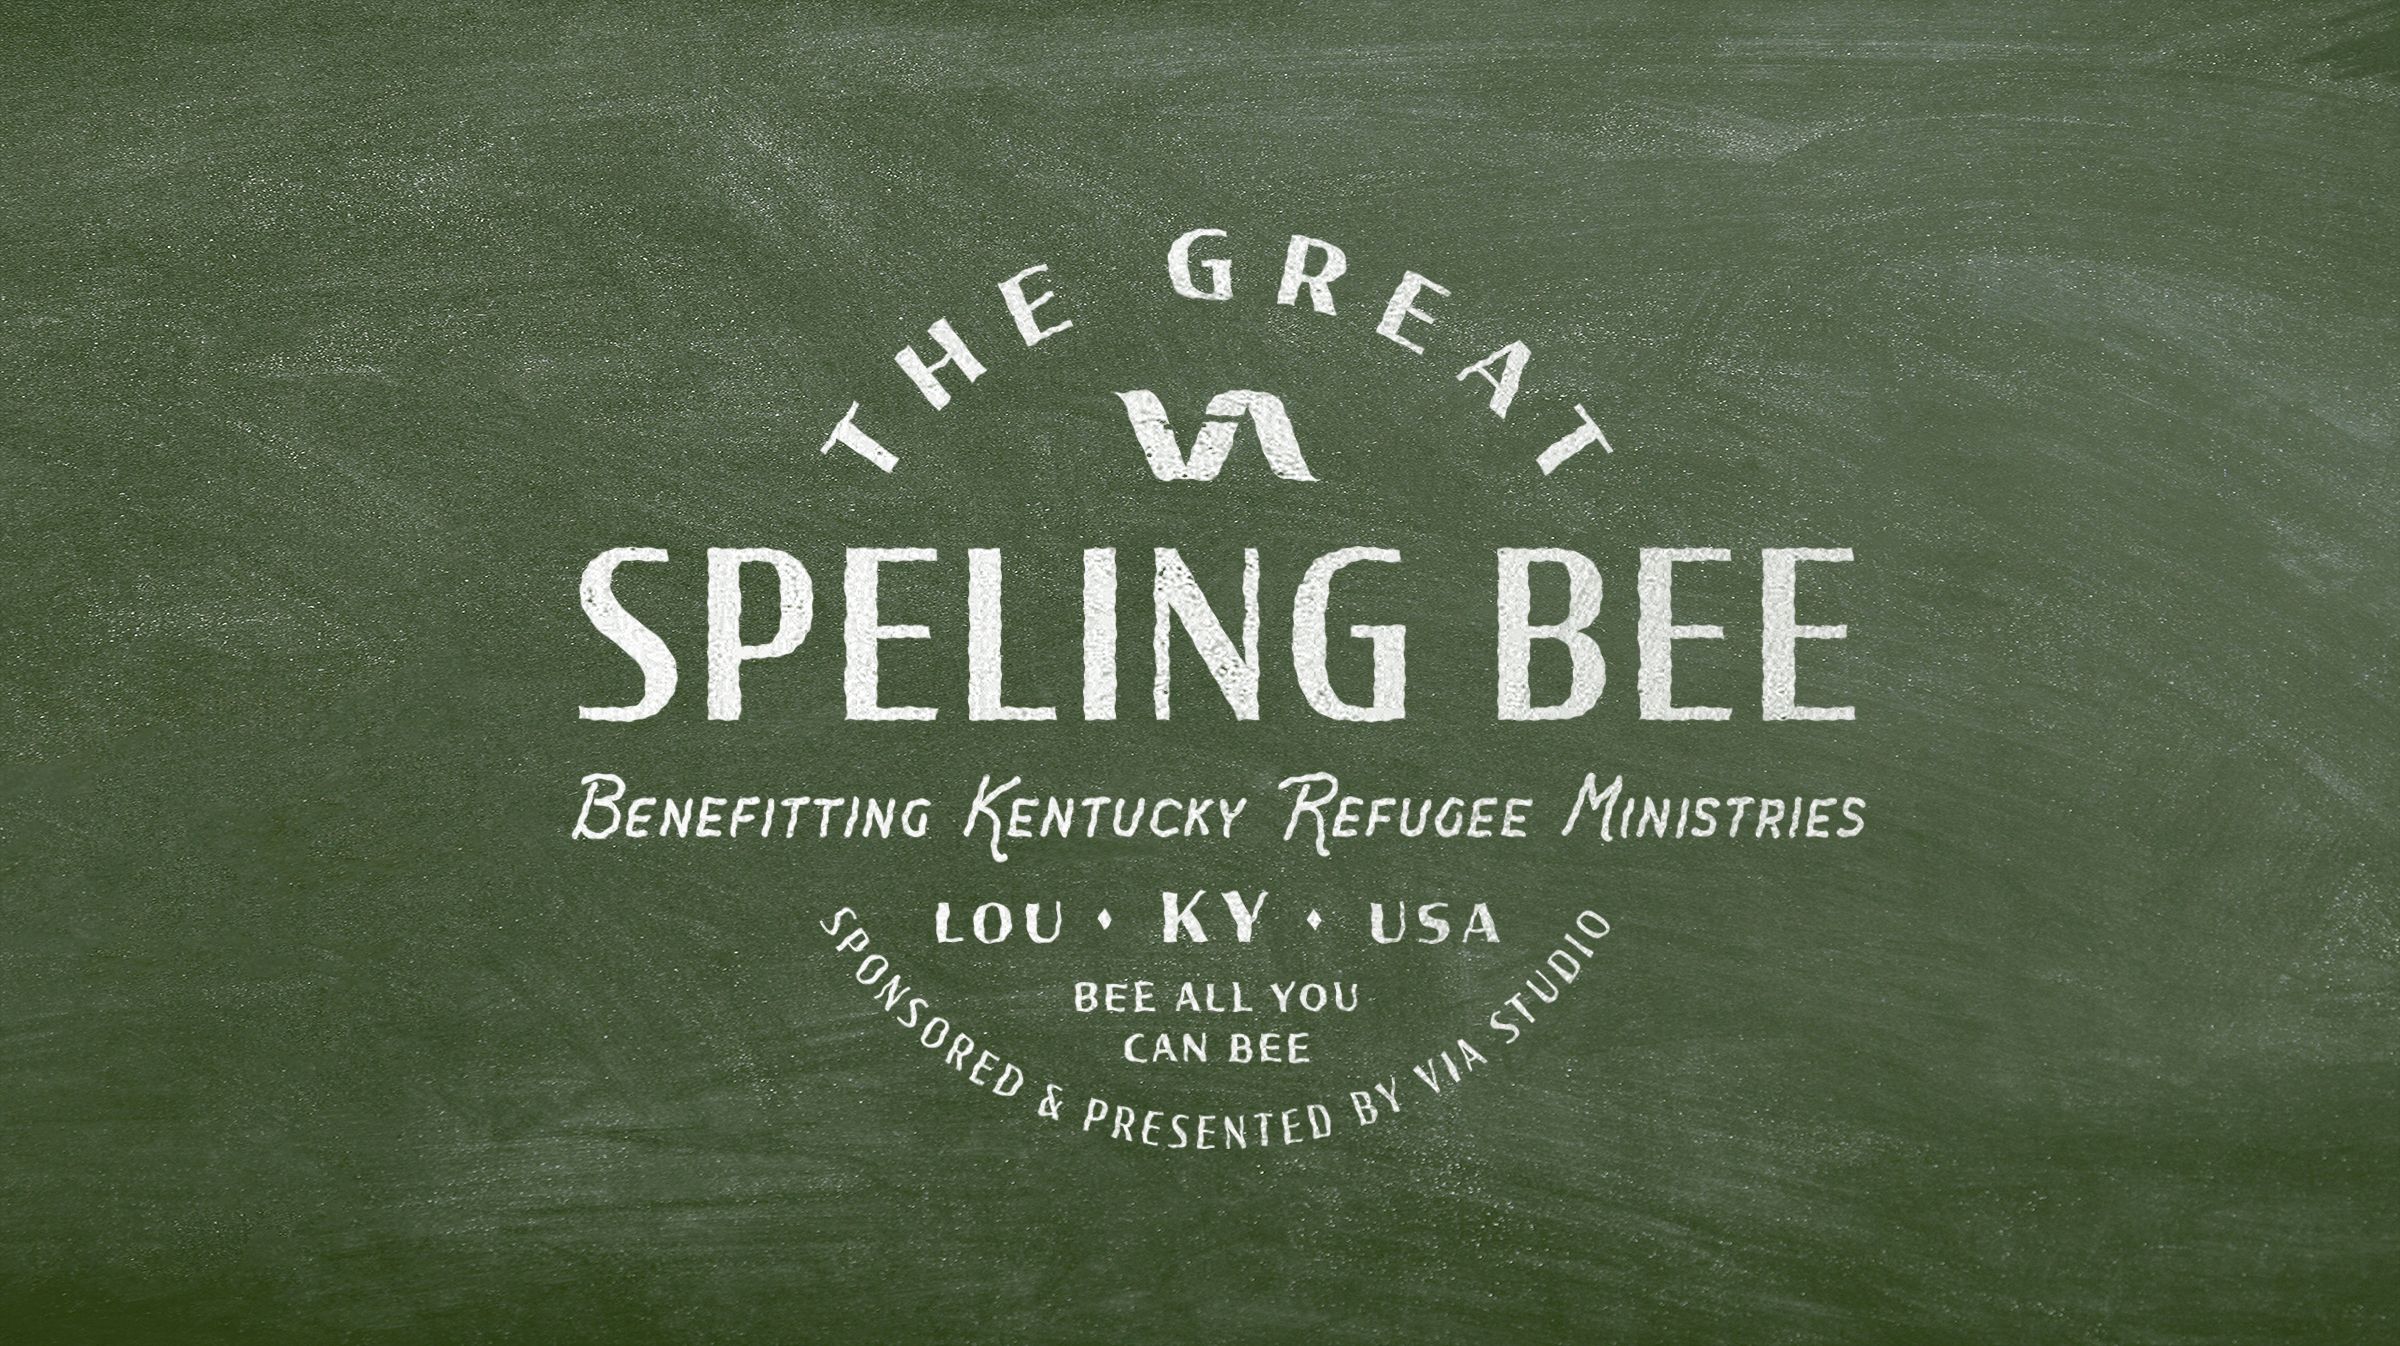 The Great VIA Speling Bee